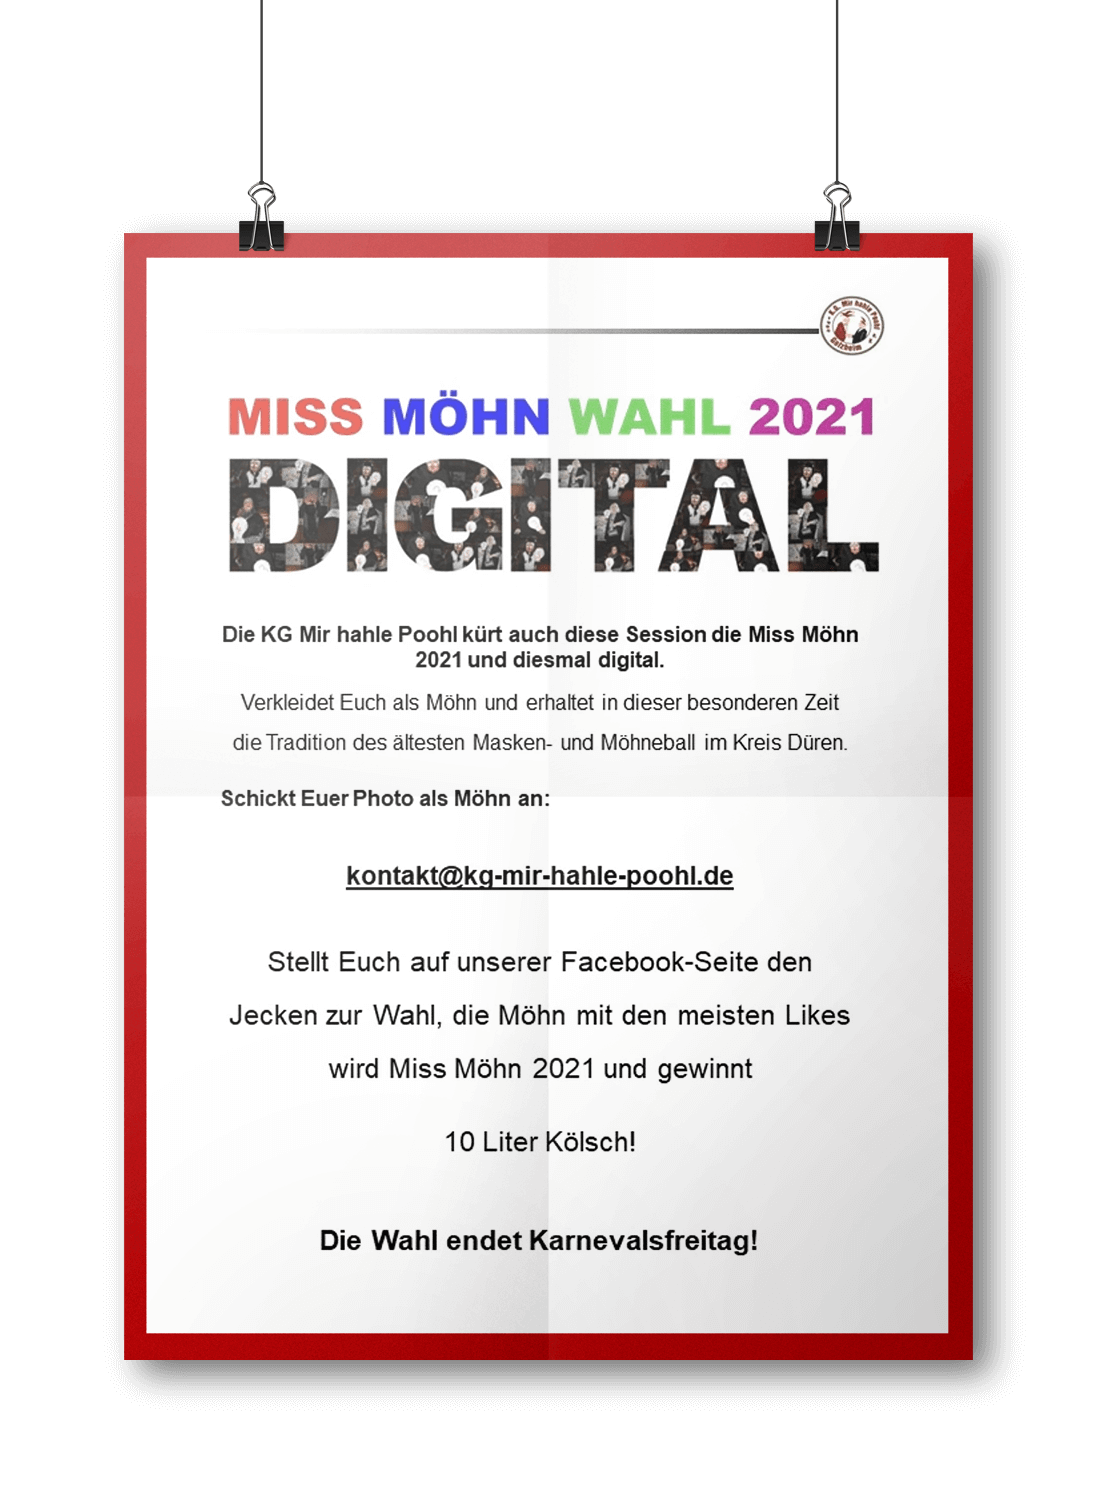 Miss Möhn Wahl 2021 - KG Mir hahle Poohl Golzheim 1905 e.V.